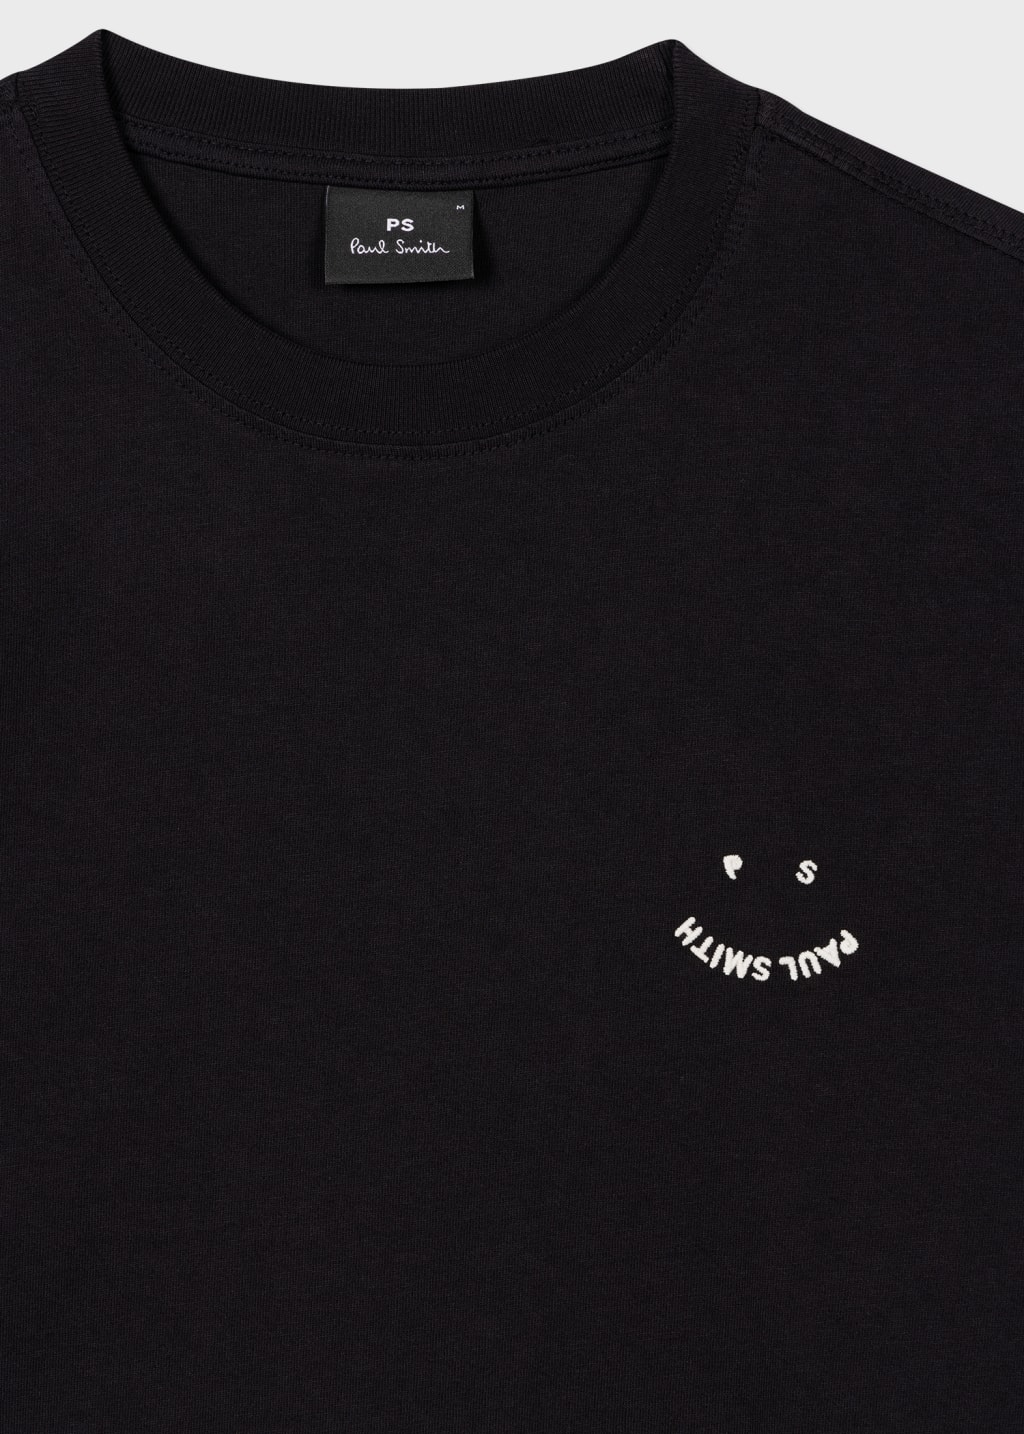 Detail View - Black Cotton 'Happy' T-Shirt Paul Smith